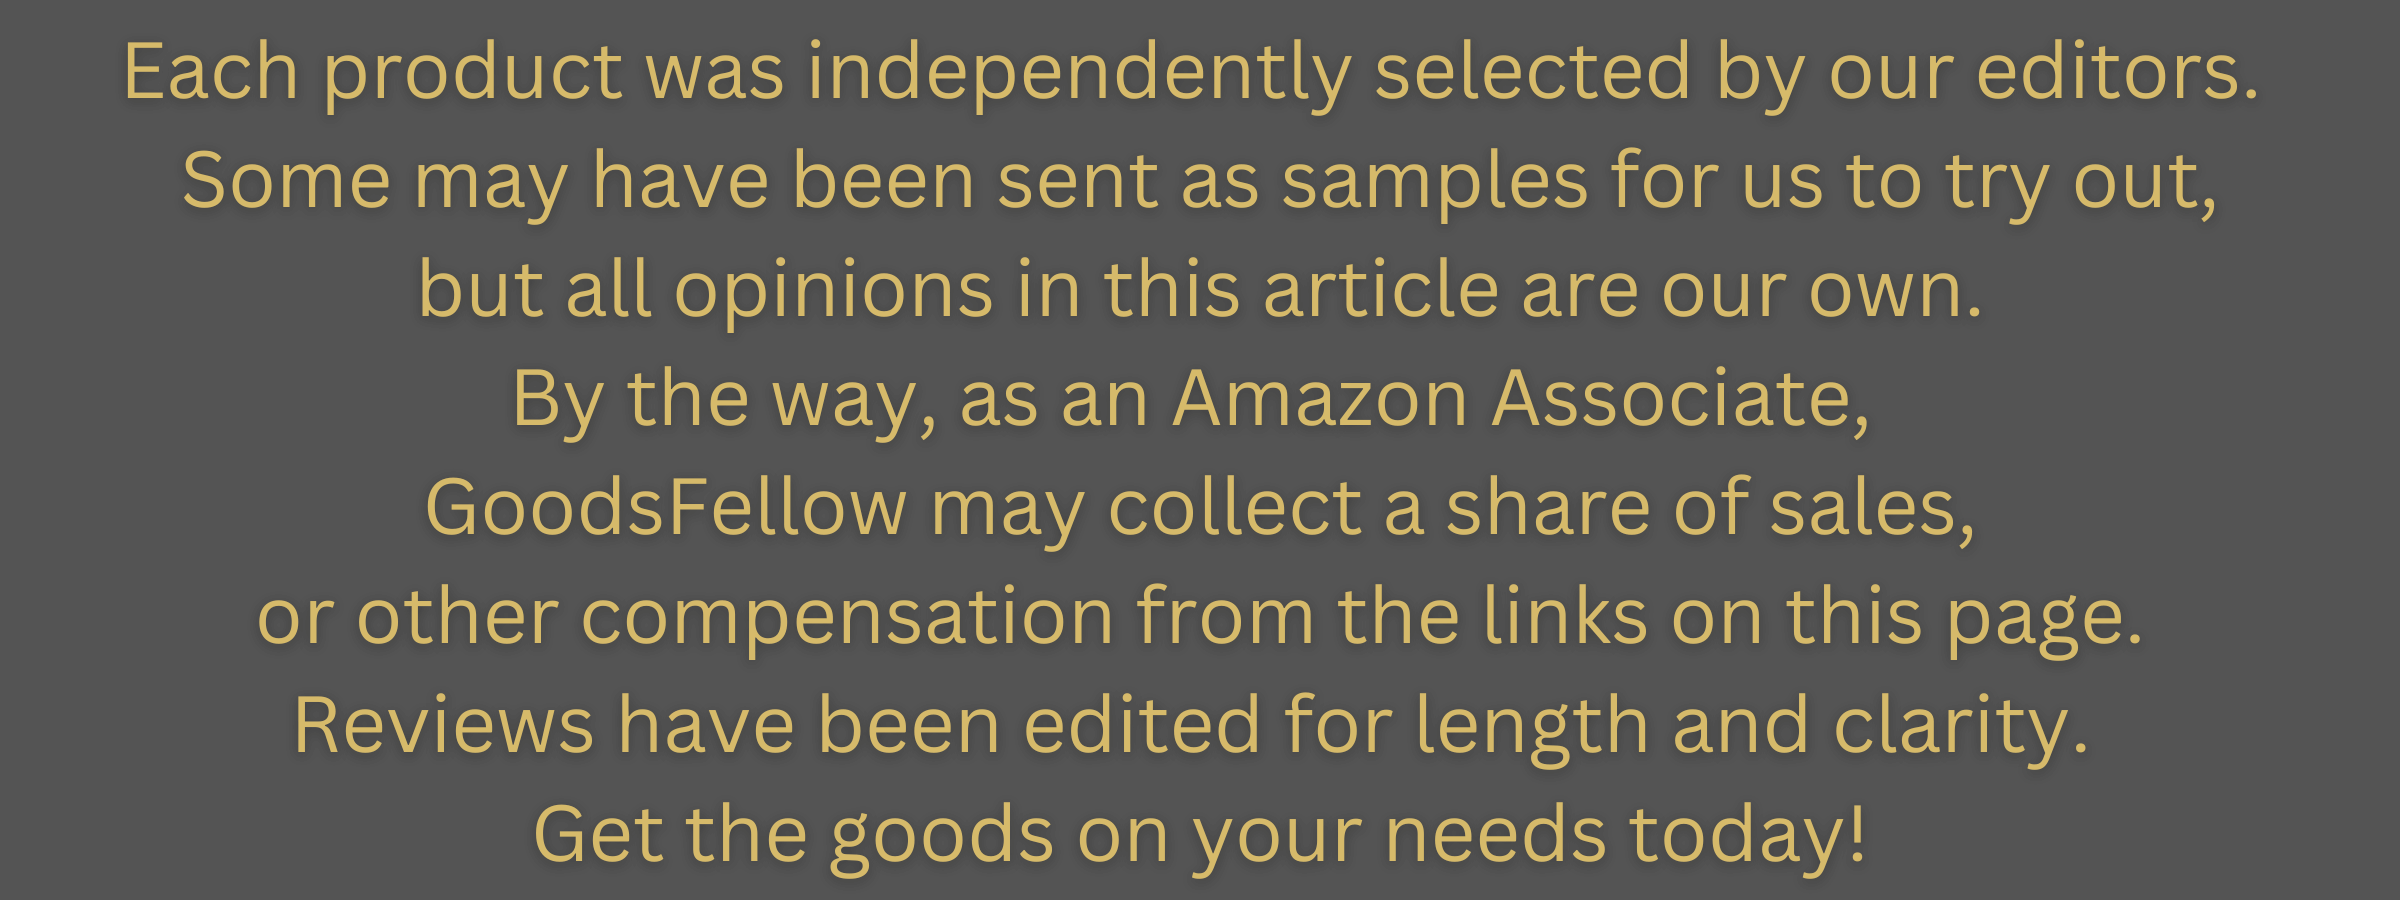 Amazon Associates Commission Disclosure